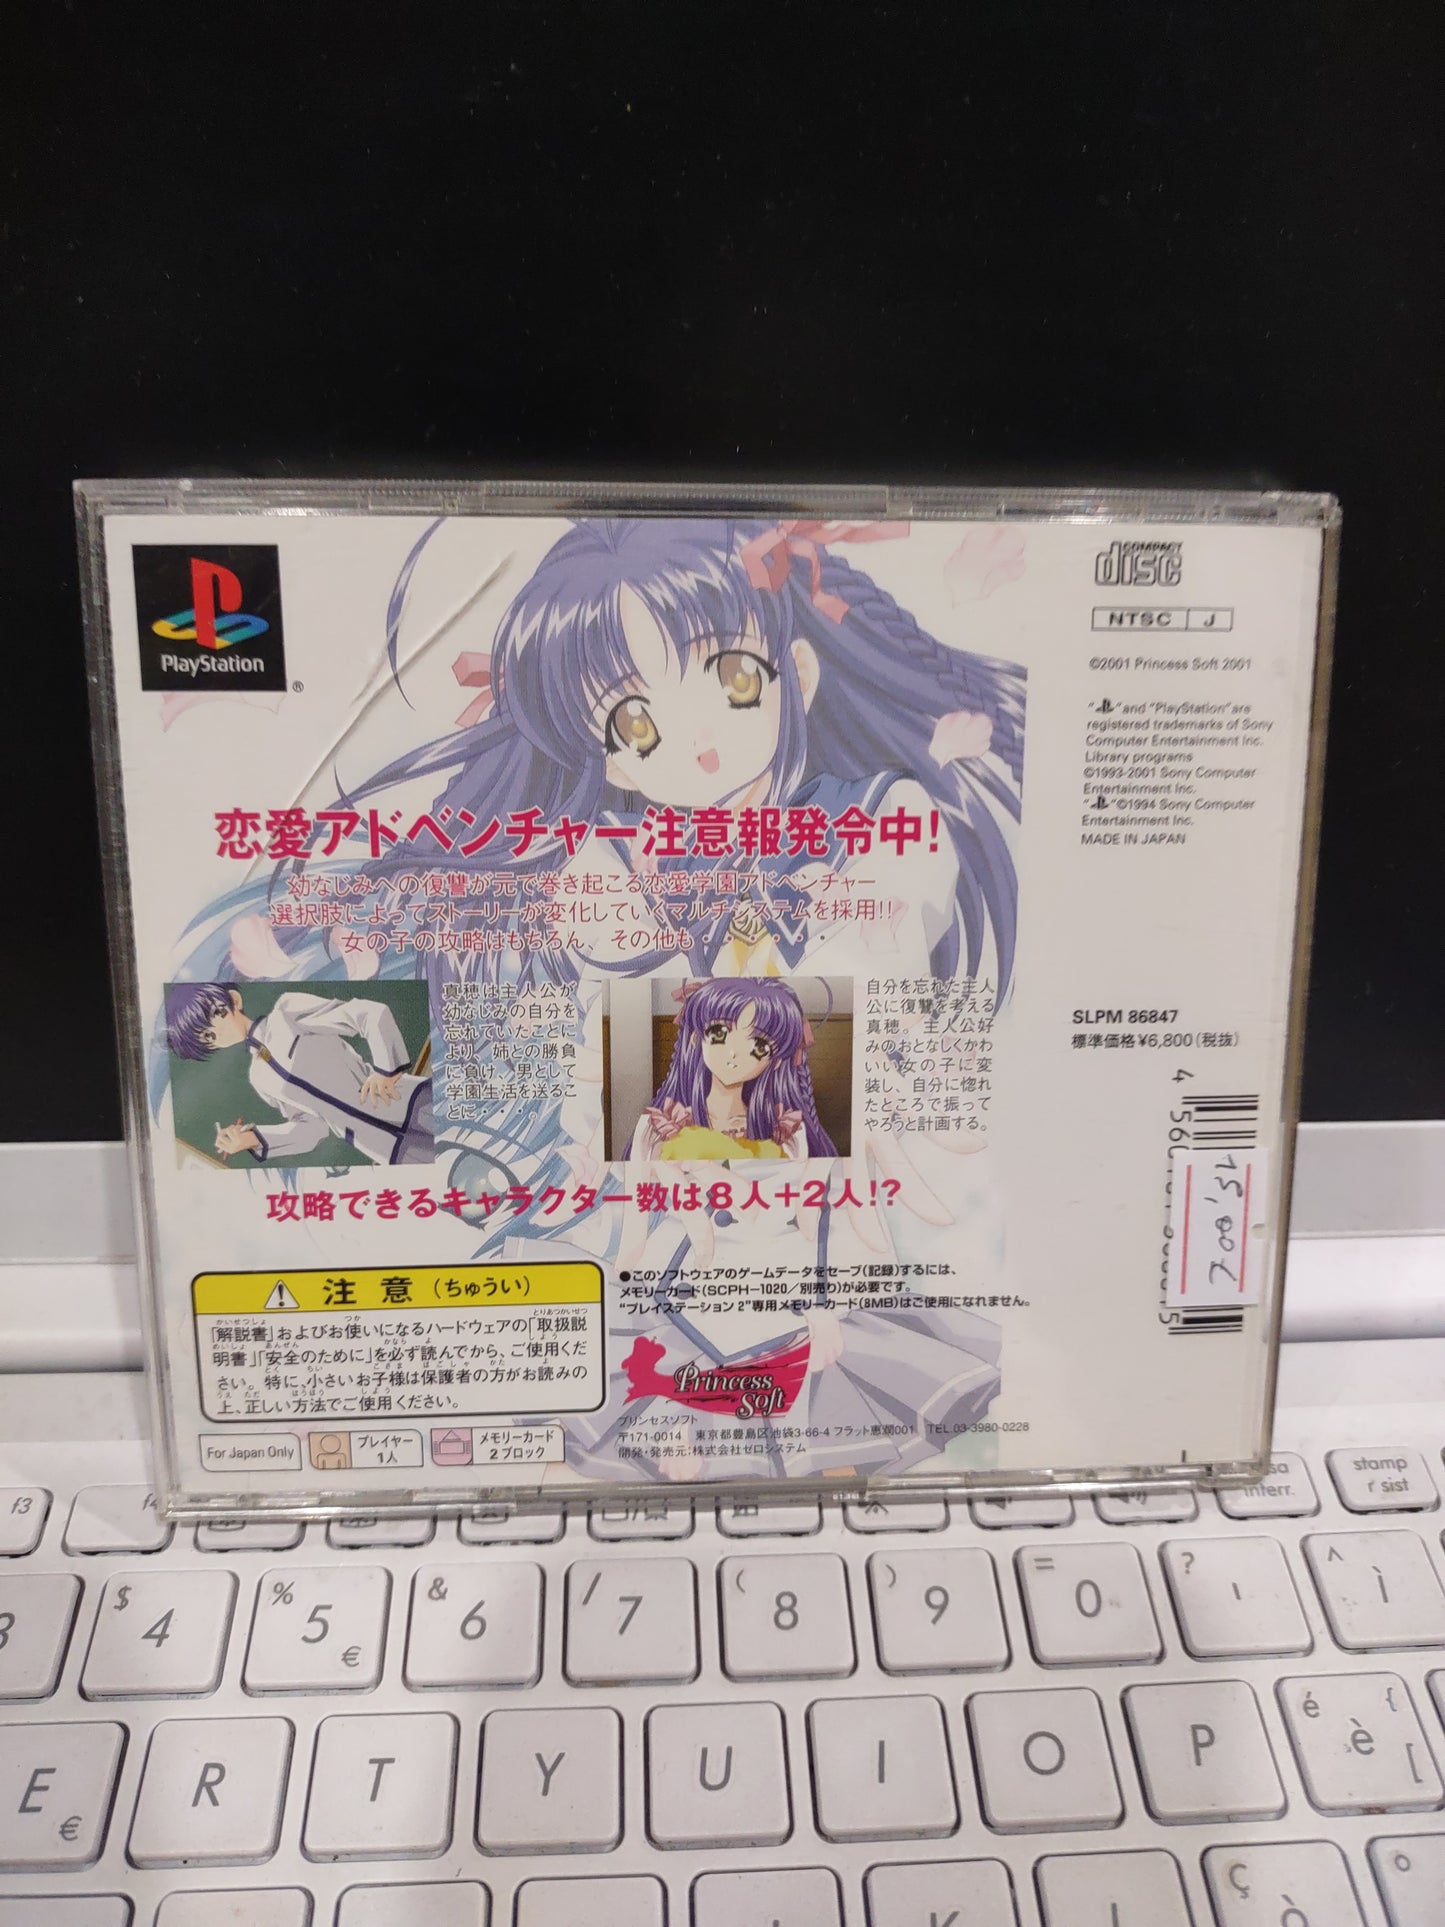 Gioco PlayStation PS1 Japan giapponese koiyohou